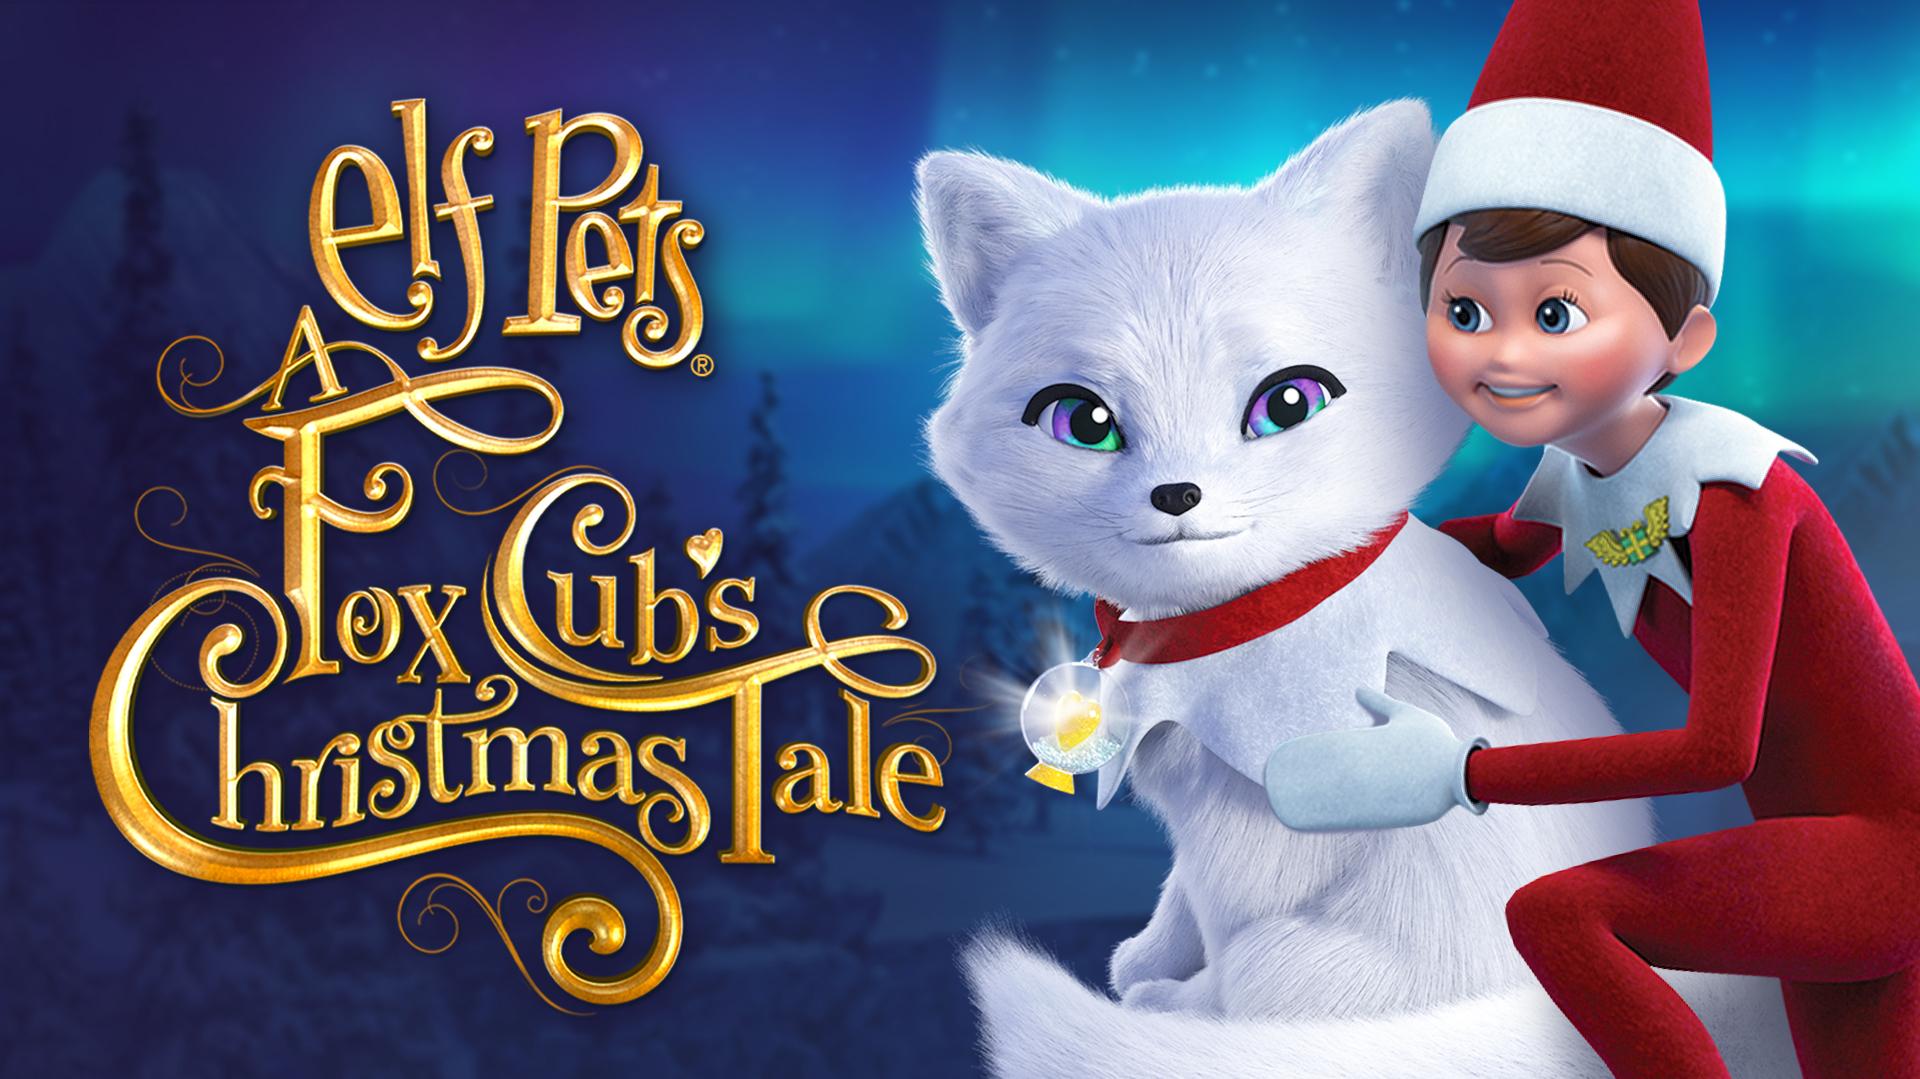 Watch Elf on the Shelf Elf Pets A Fox Cubs Christmas Tale